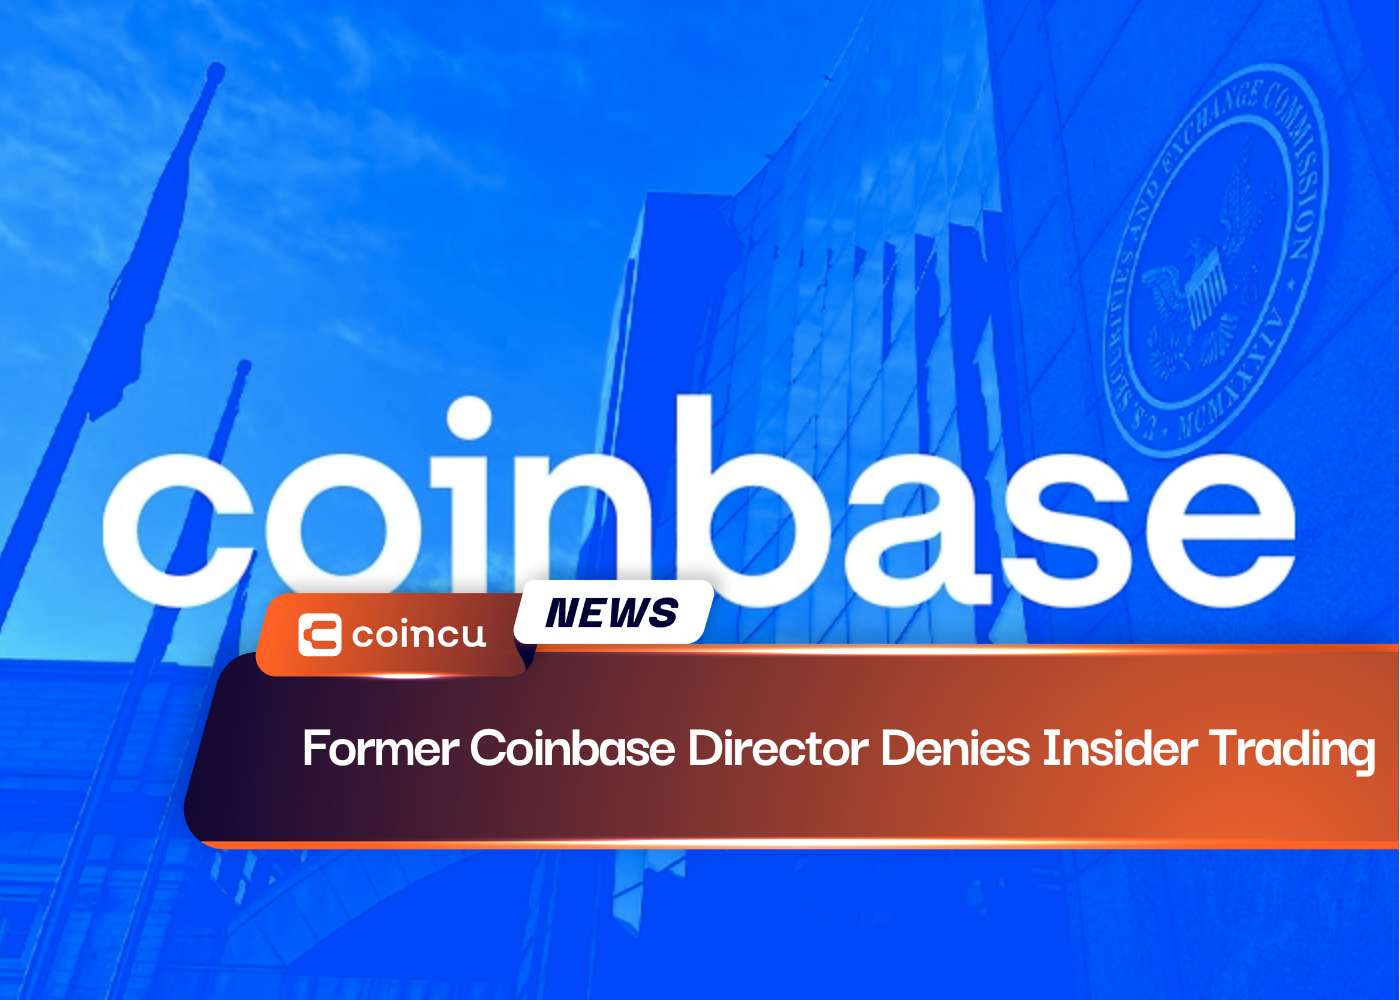 Former Coinbase Director Denies Insider Trading